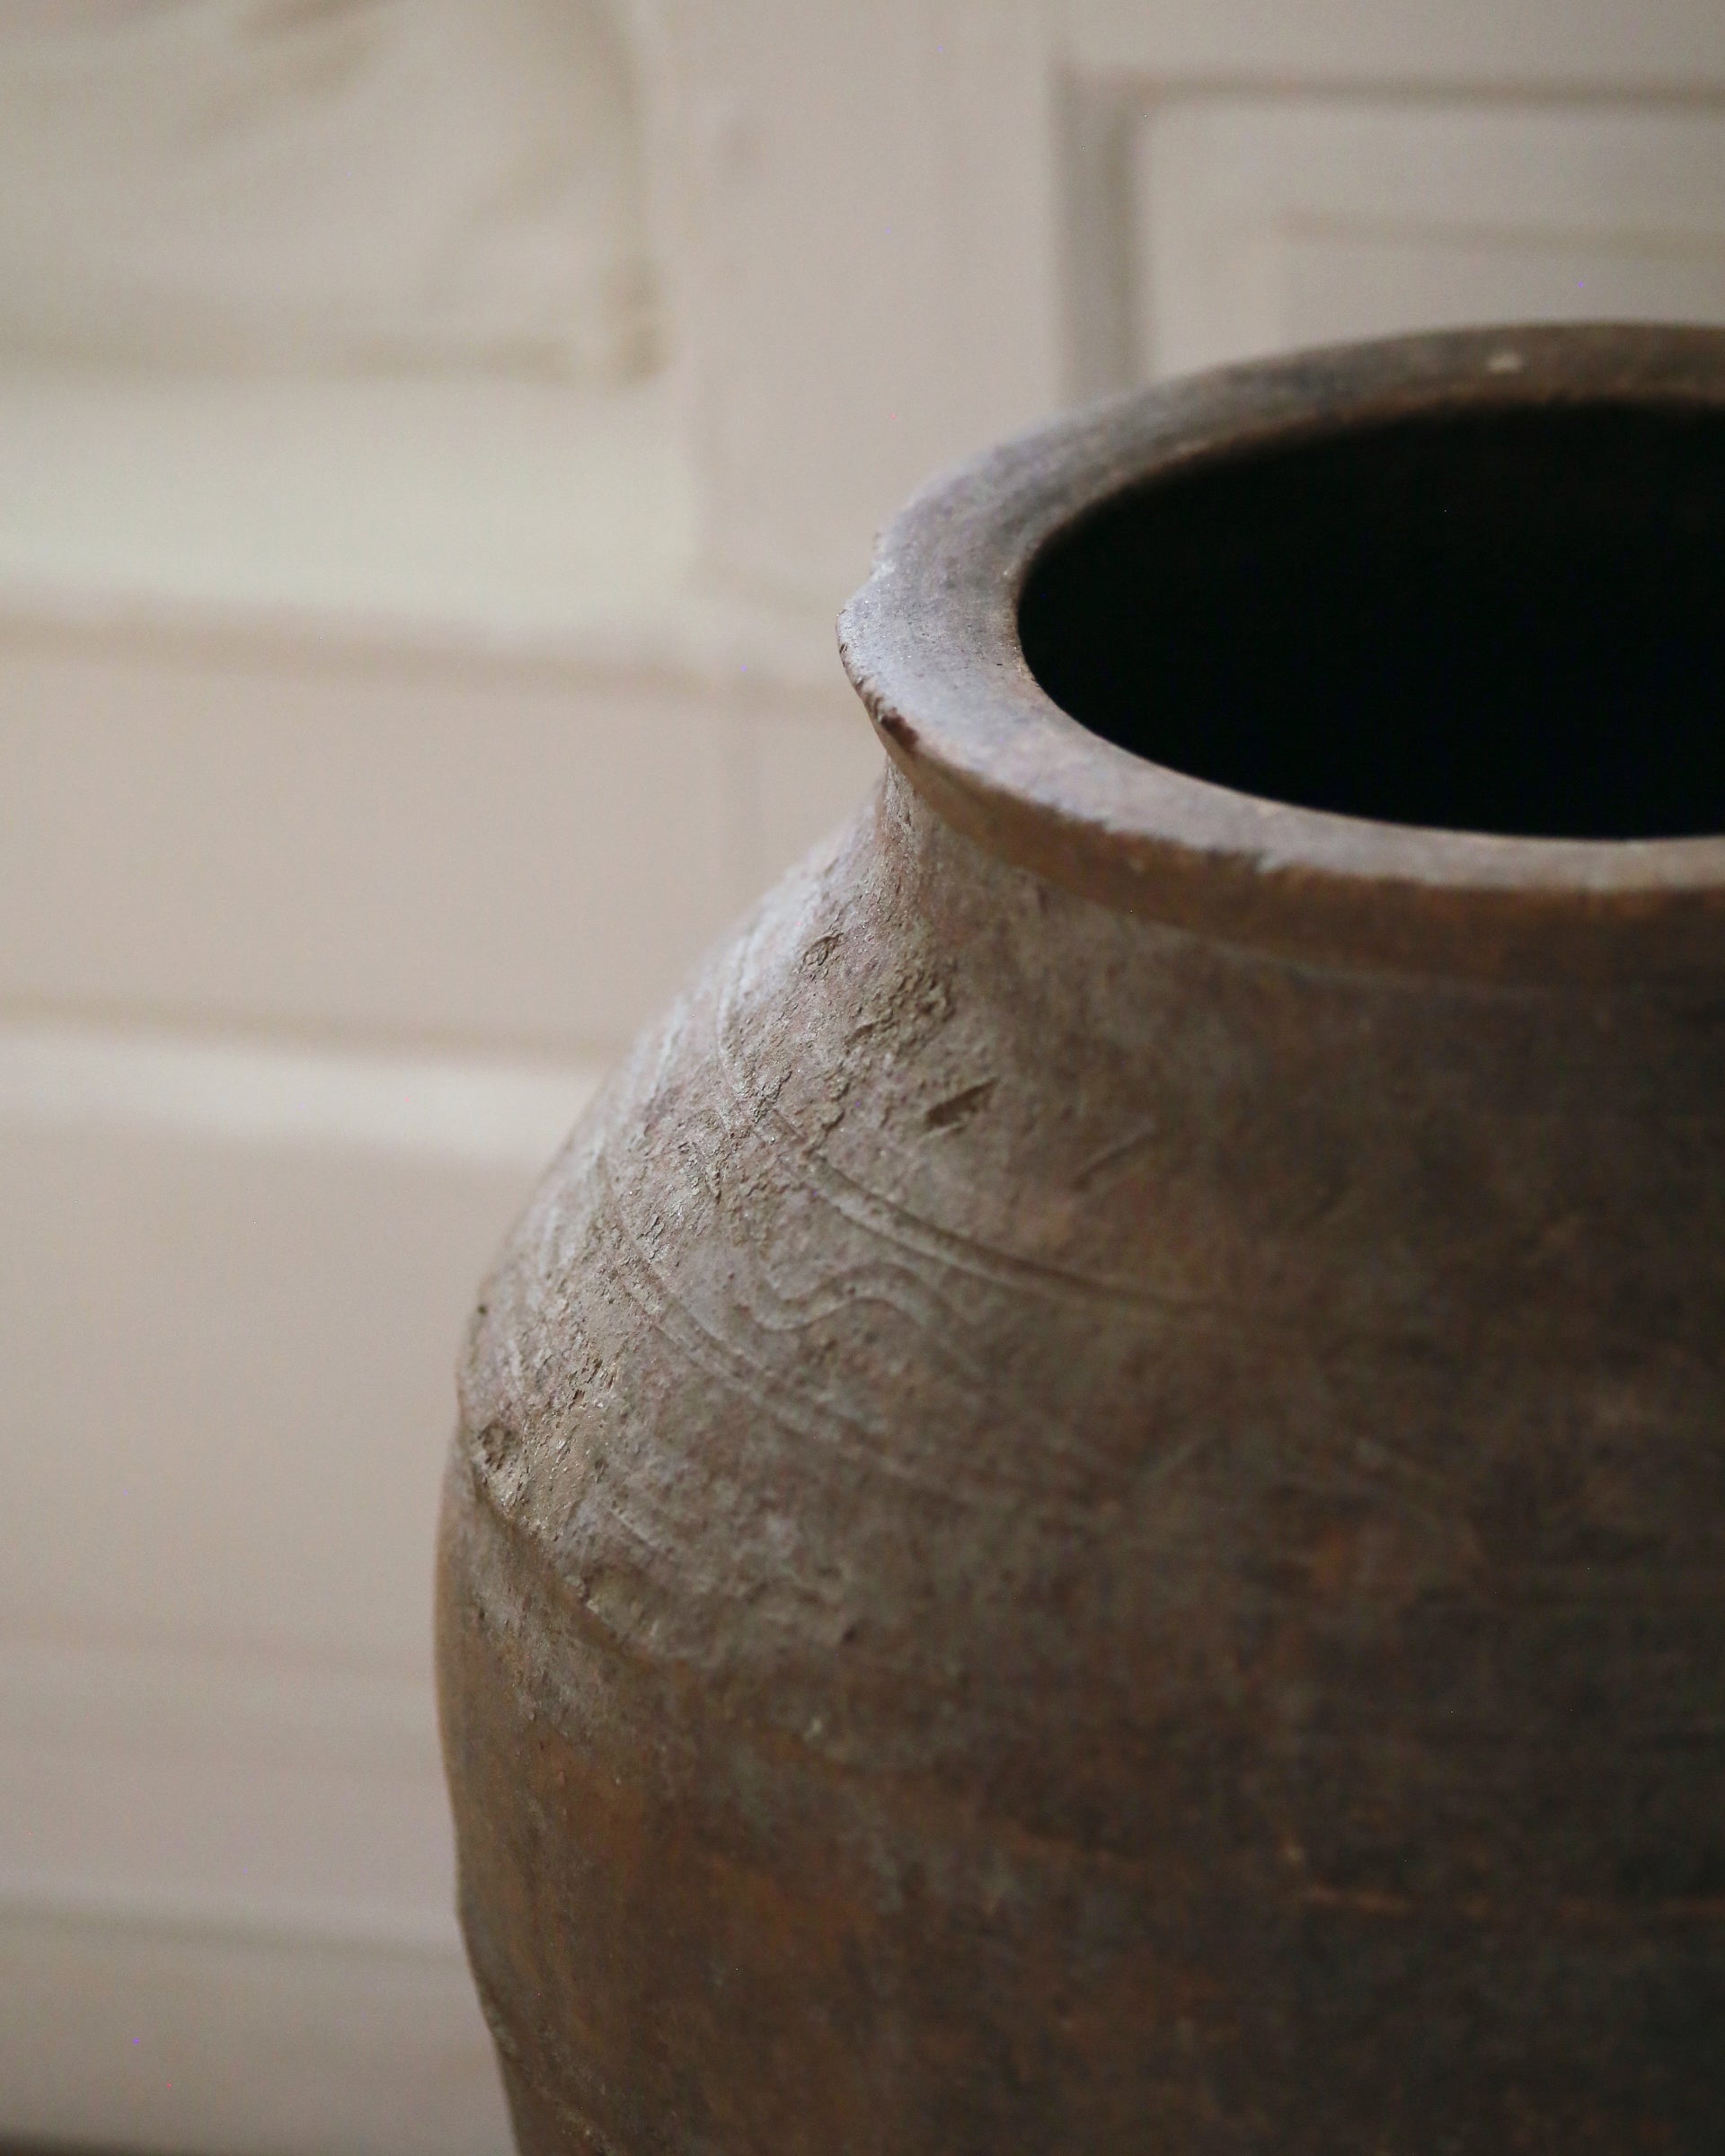 Authentic detail of dark pot